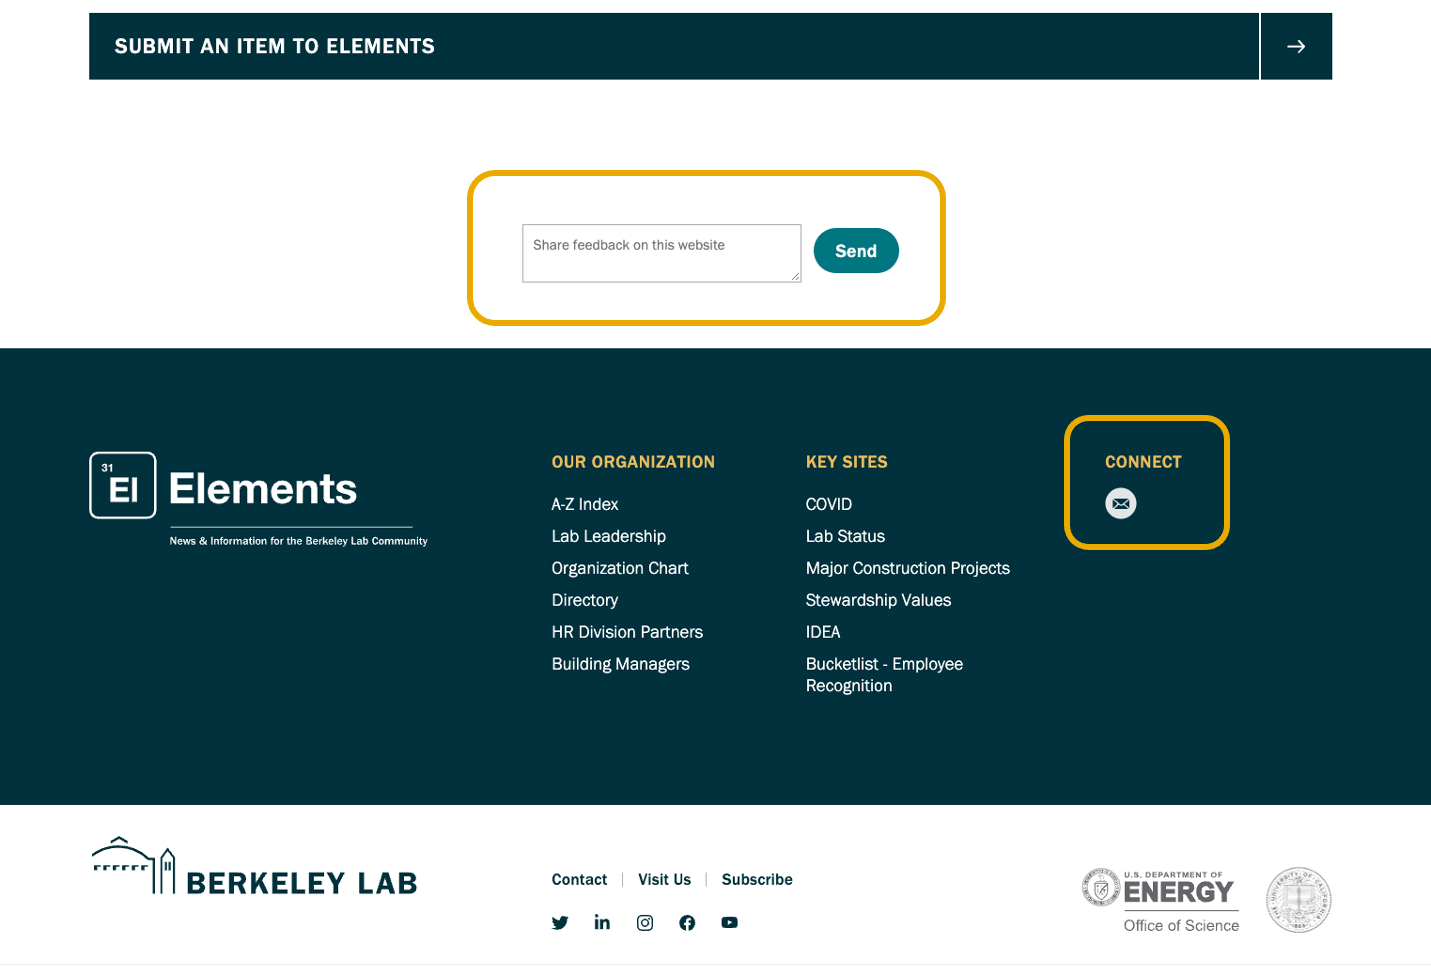 Highlighting feedback channels on Elements website